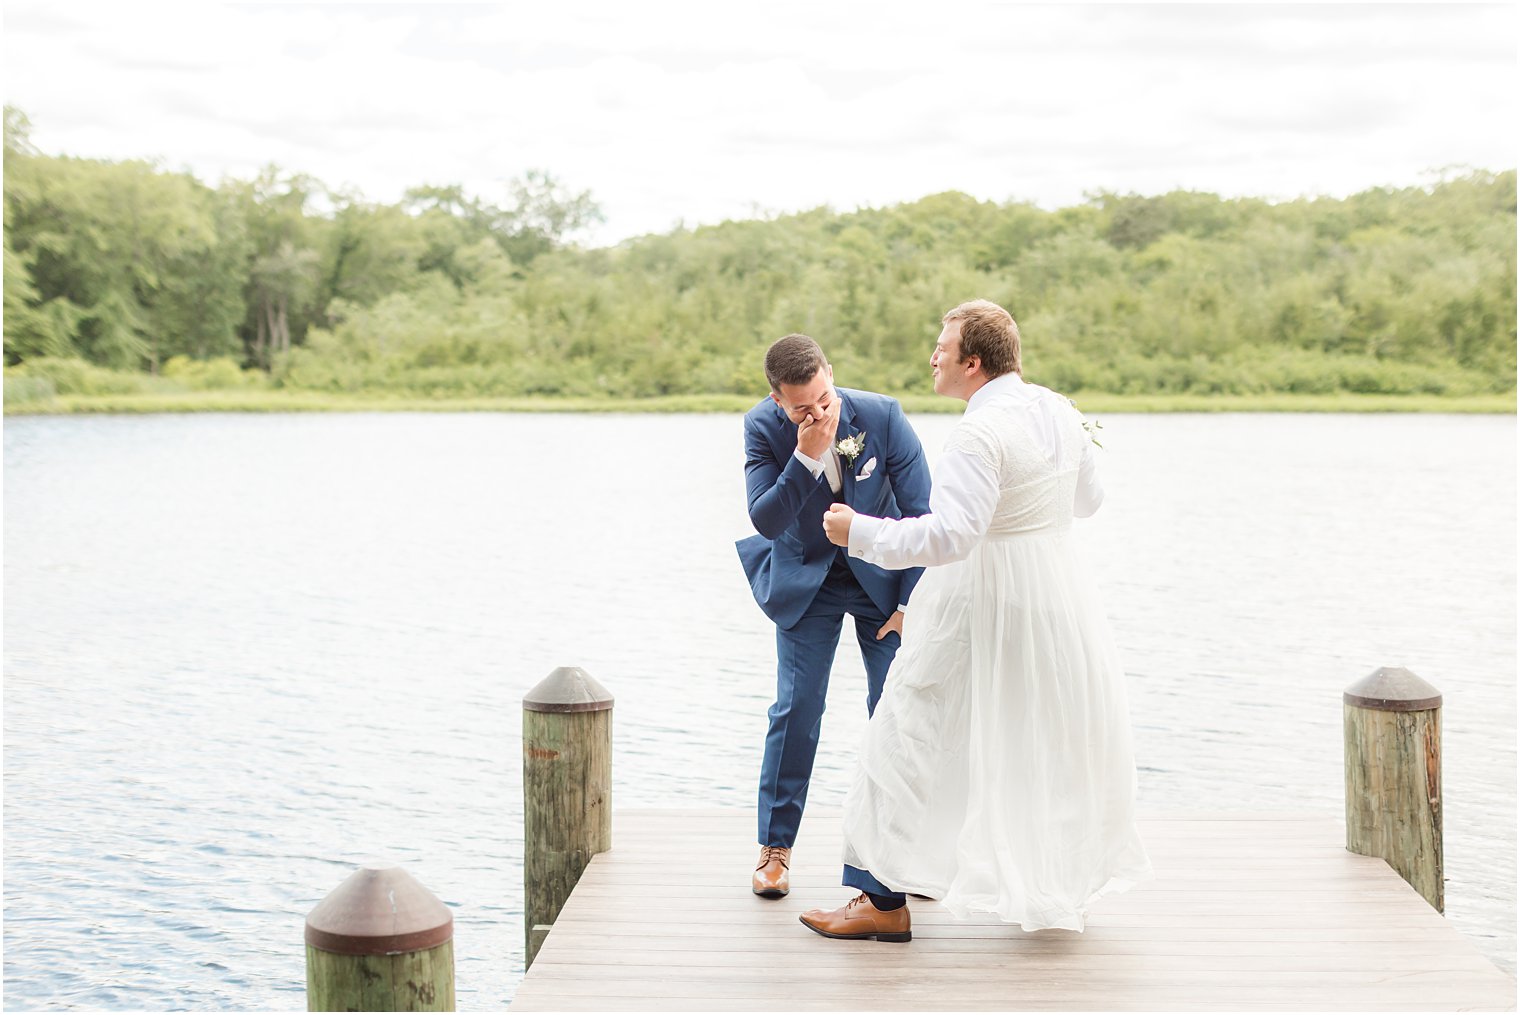 groomsman surprises groom on dock for first look